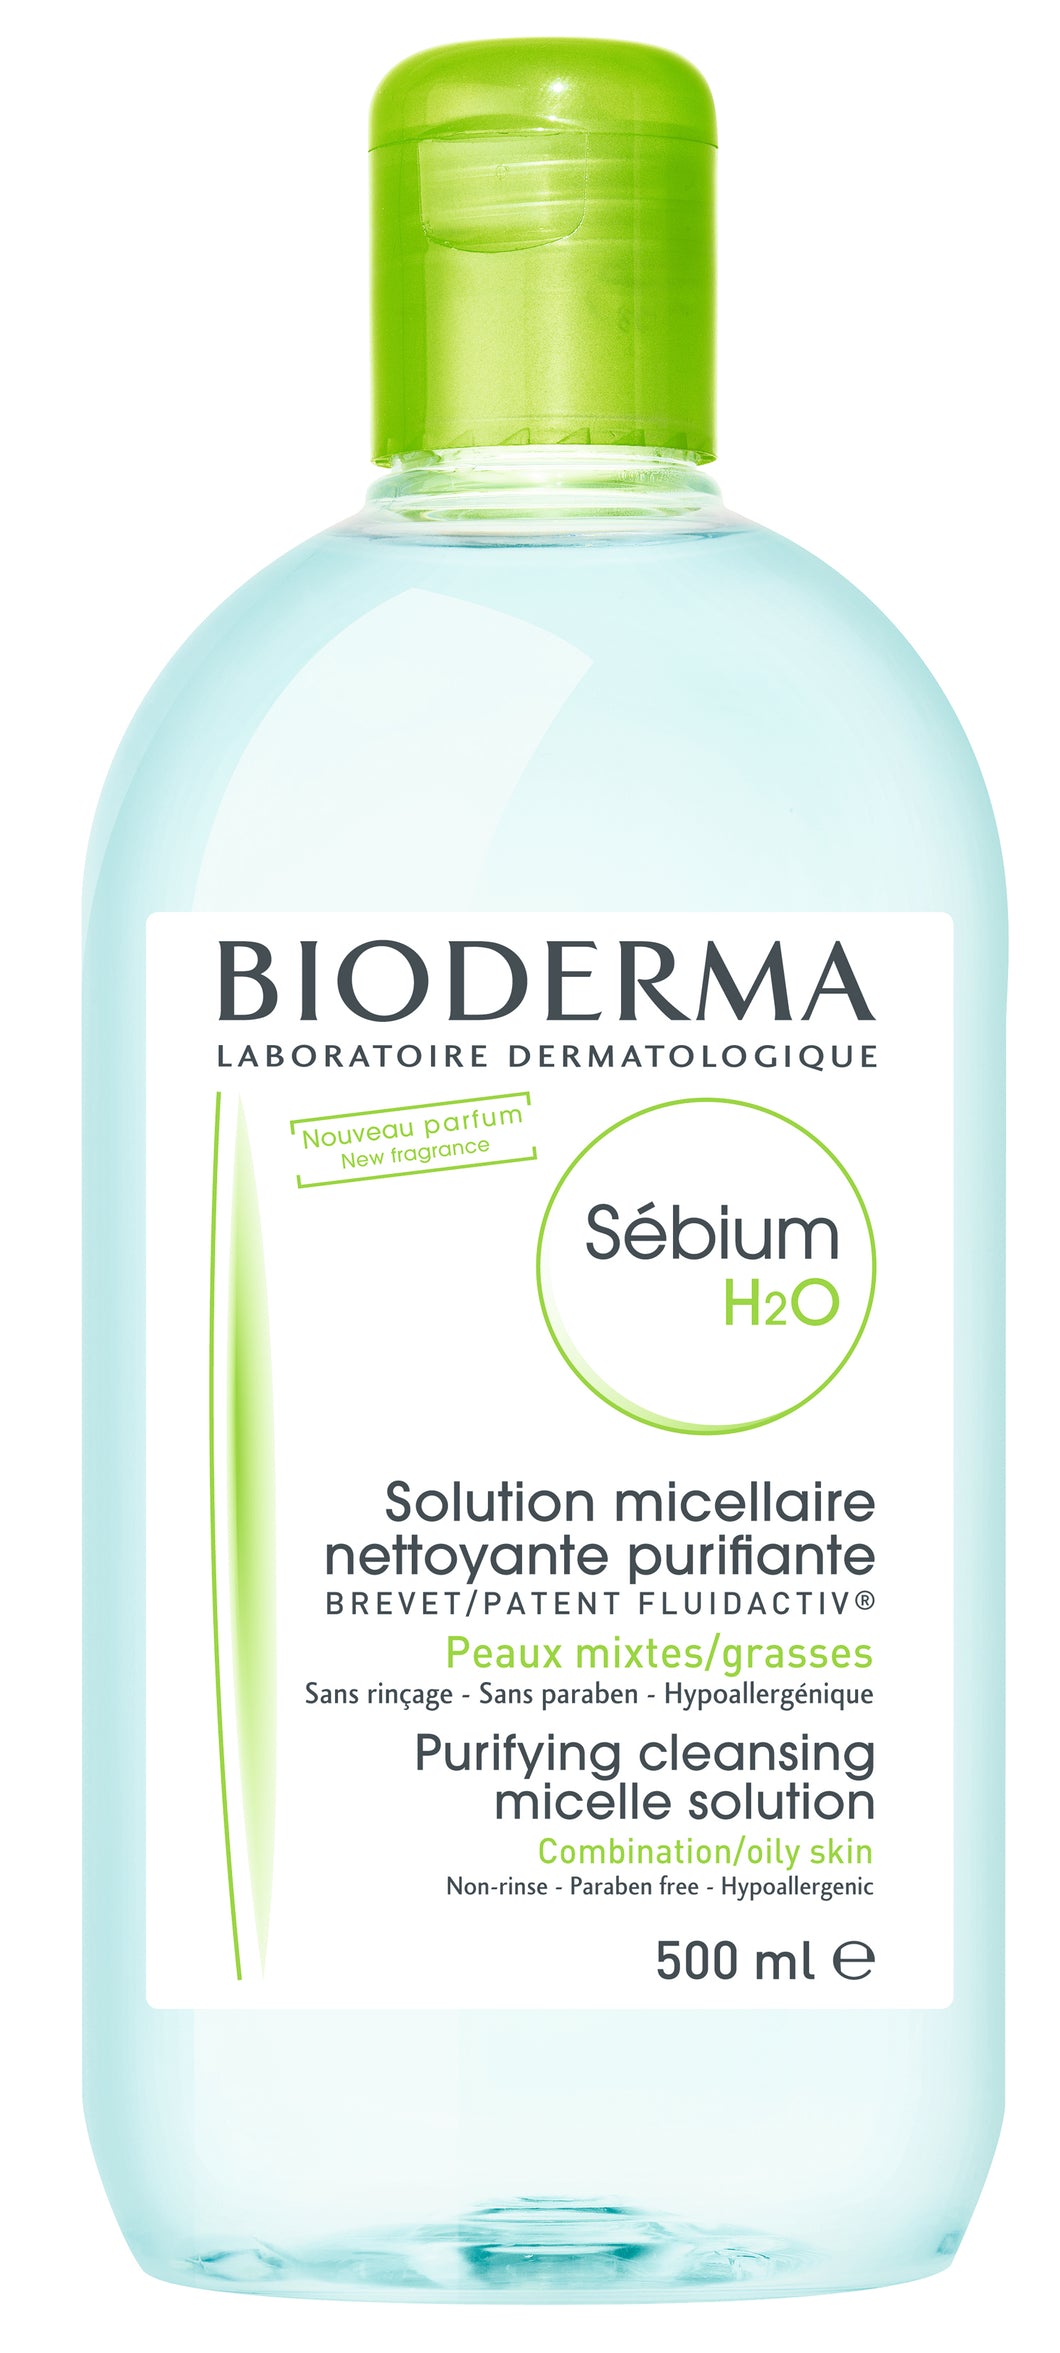 Bioderma Sébium H2O arc- és sminklemosó 500 ml